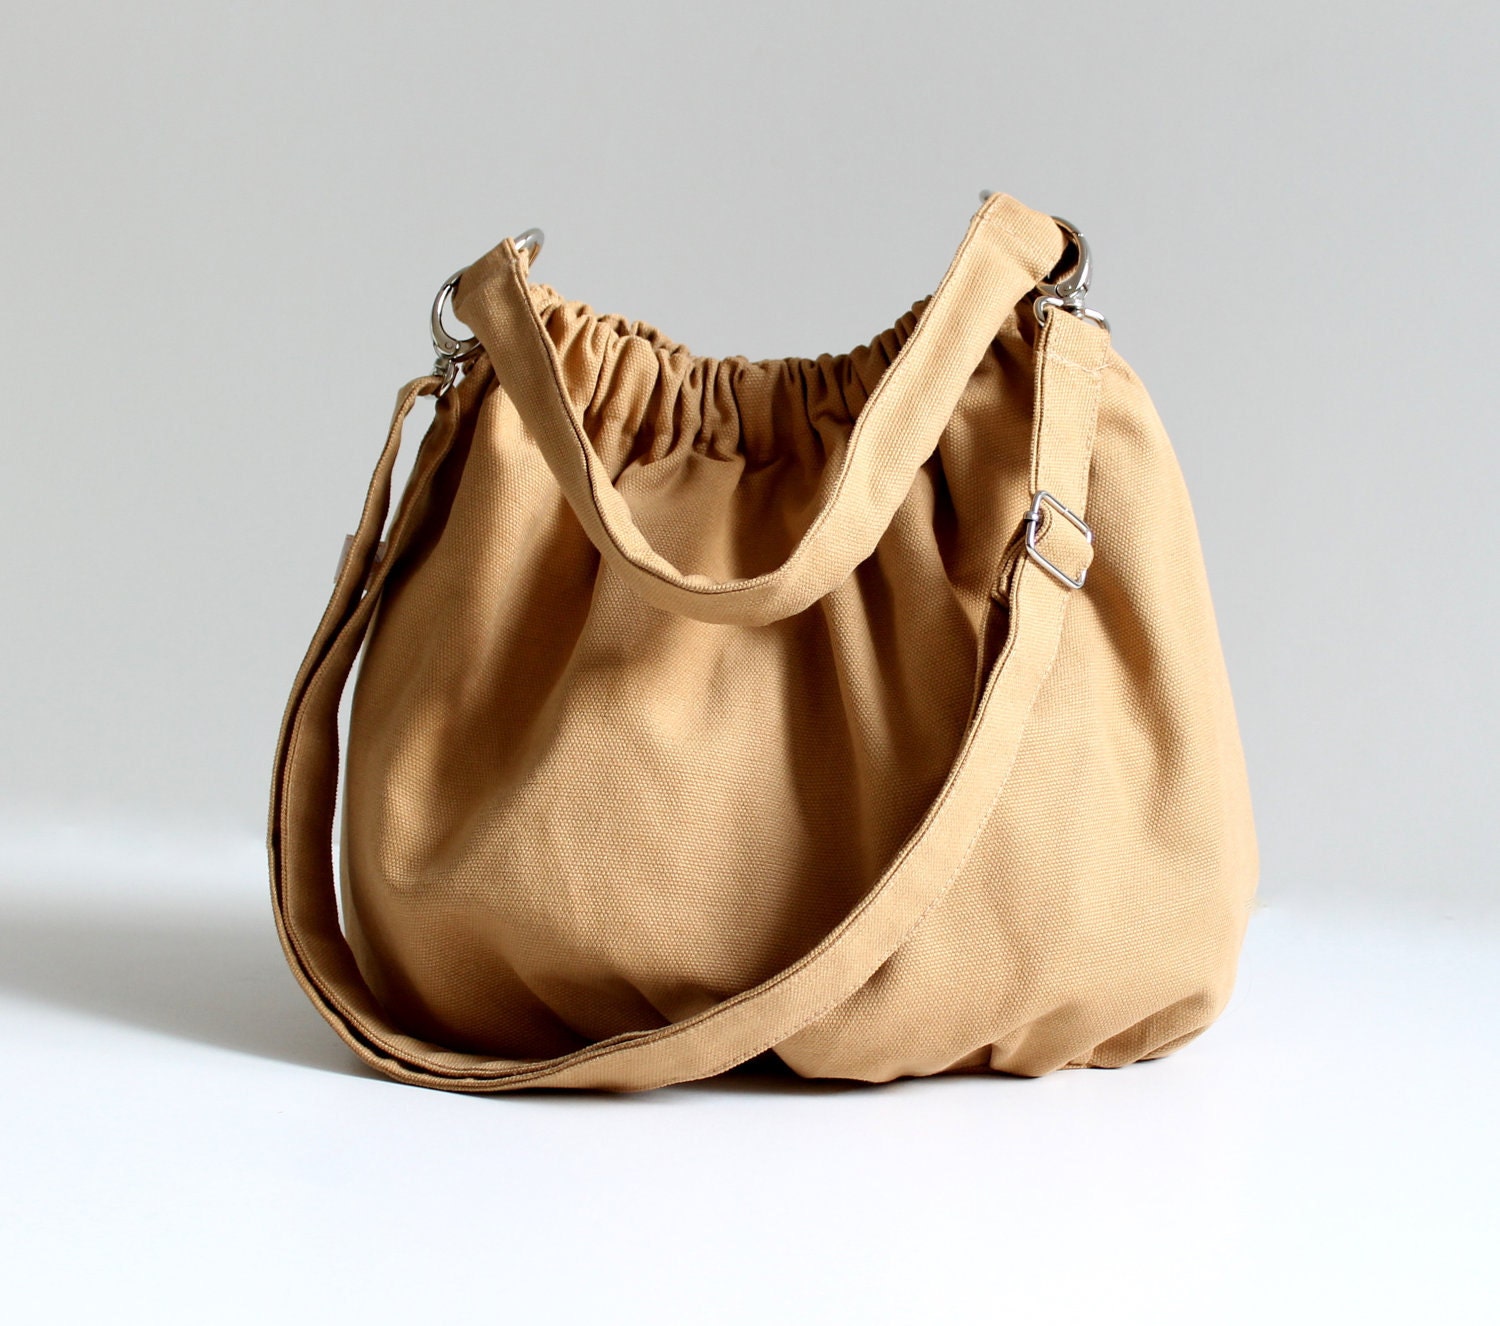 Nagy in Mustard -medium- Messenger Bag - Shoulder Bag - Summer Fashion - Cross Body Bag - Natural - Woodland - everyday bag - bayanhippo